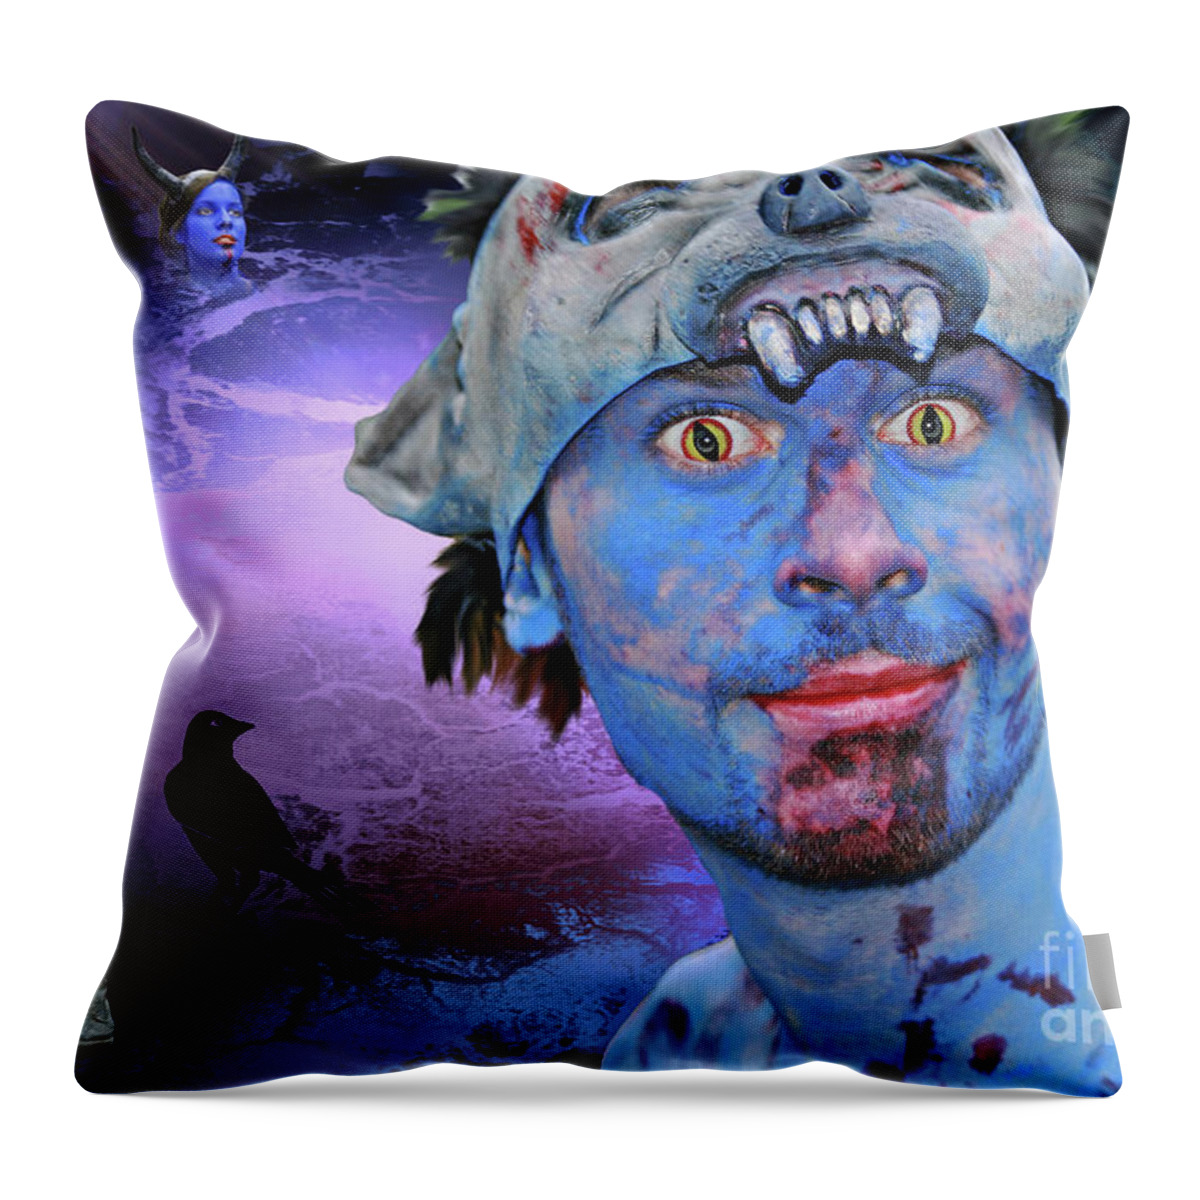 Halloween Throw Pillow featuring the digital art Out of the Twilight by Gabriele Pomykaj